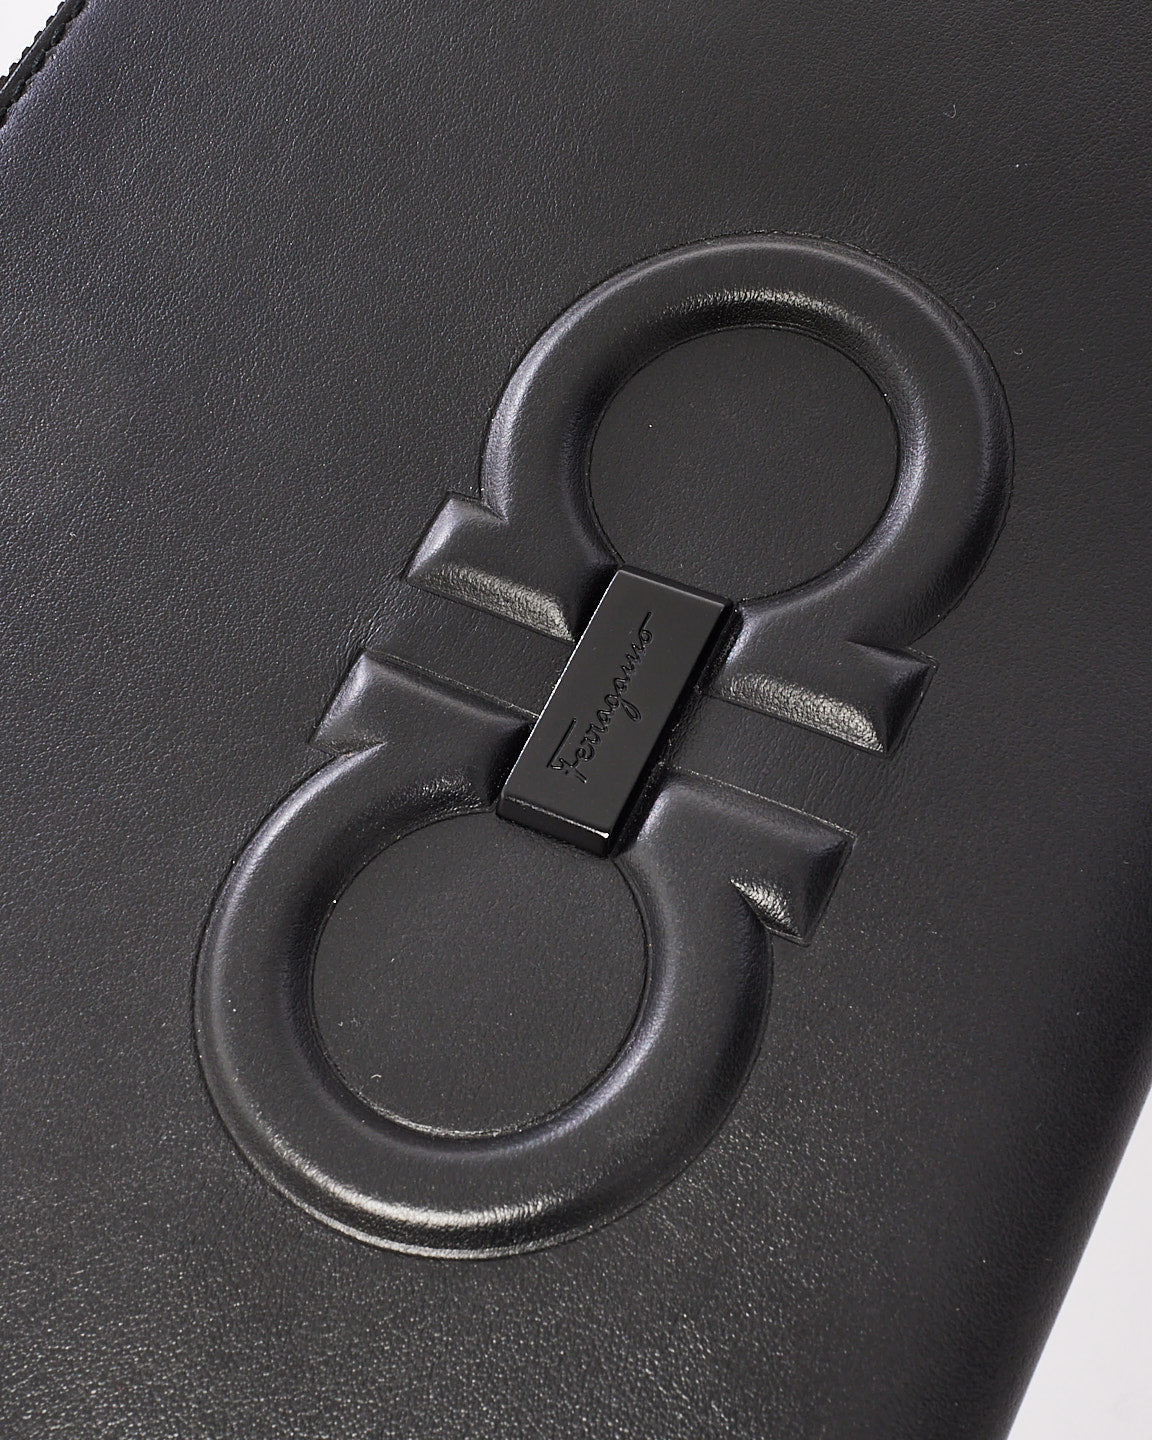 Salvatore Ferragamo Black Leather Embossed Logo Wristlet Clutch